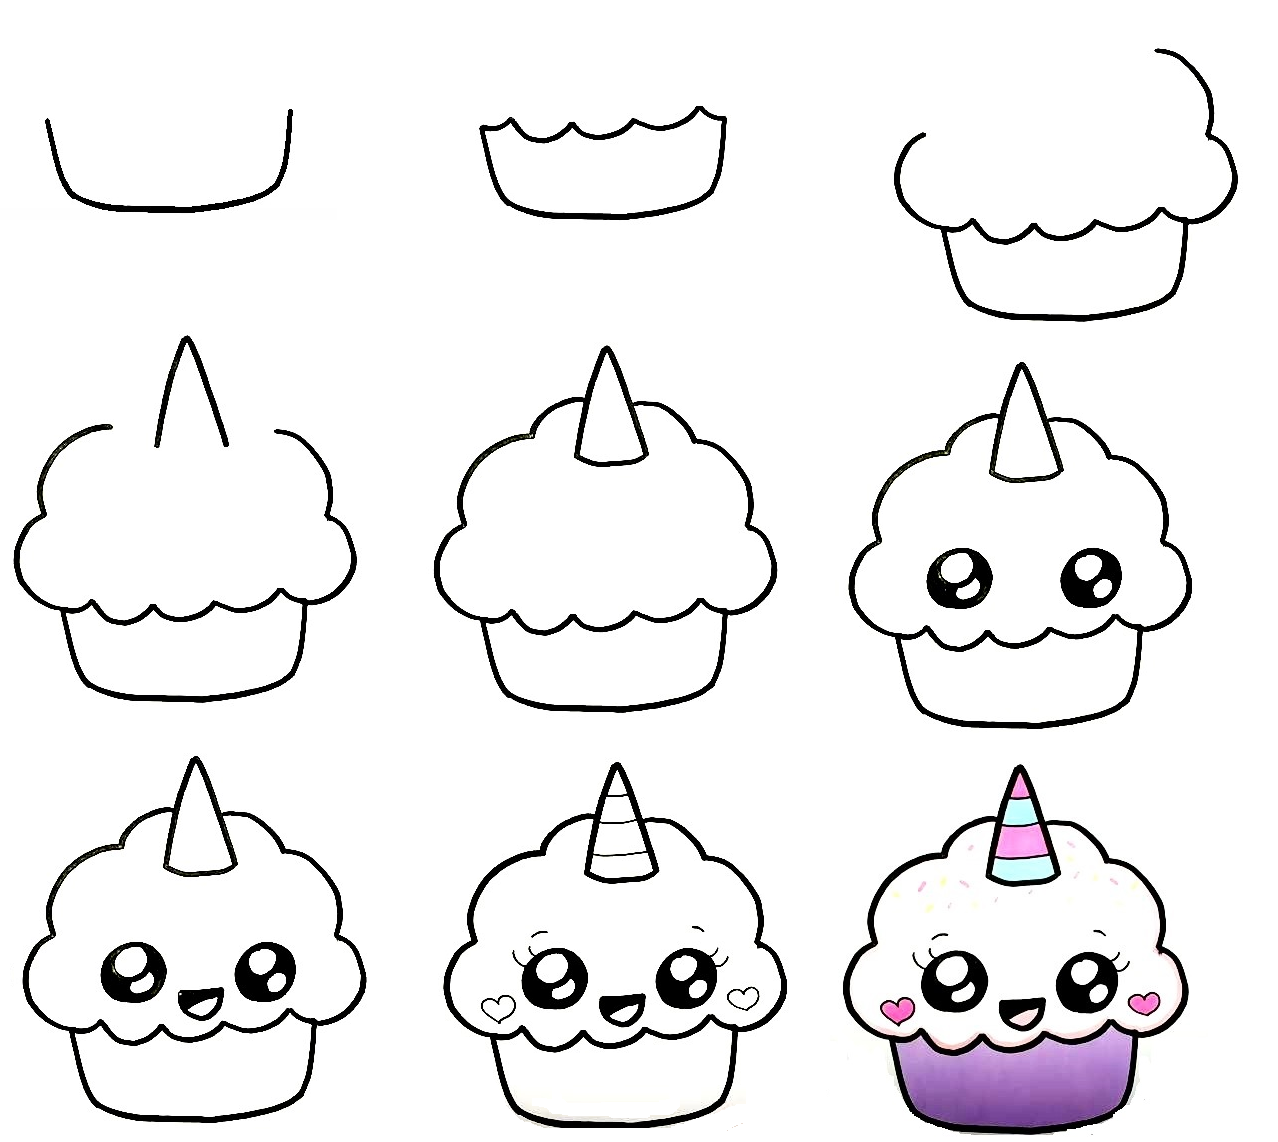 A Cupcake Drawing